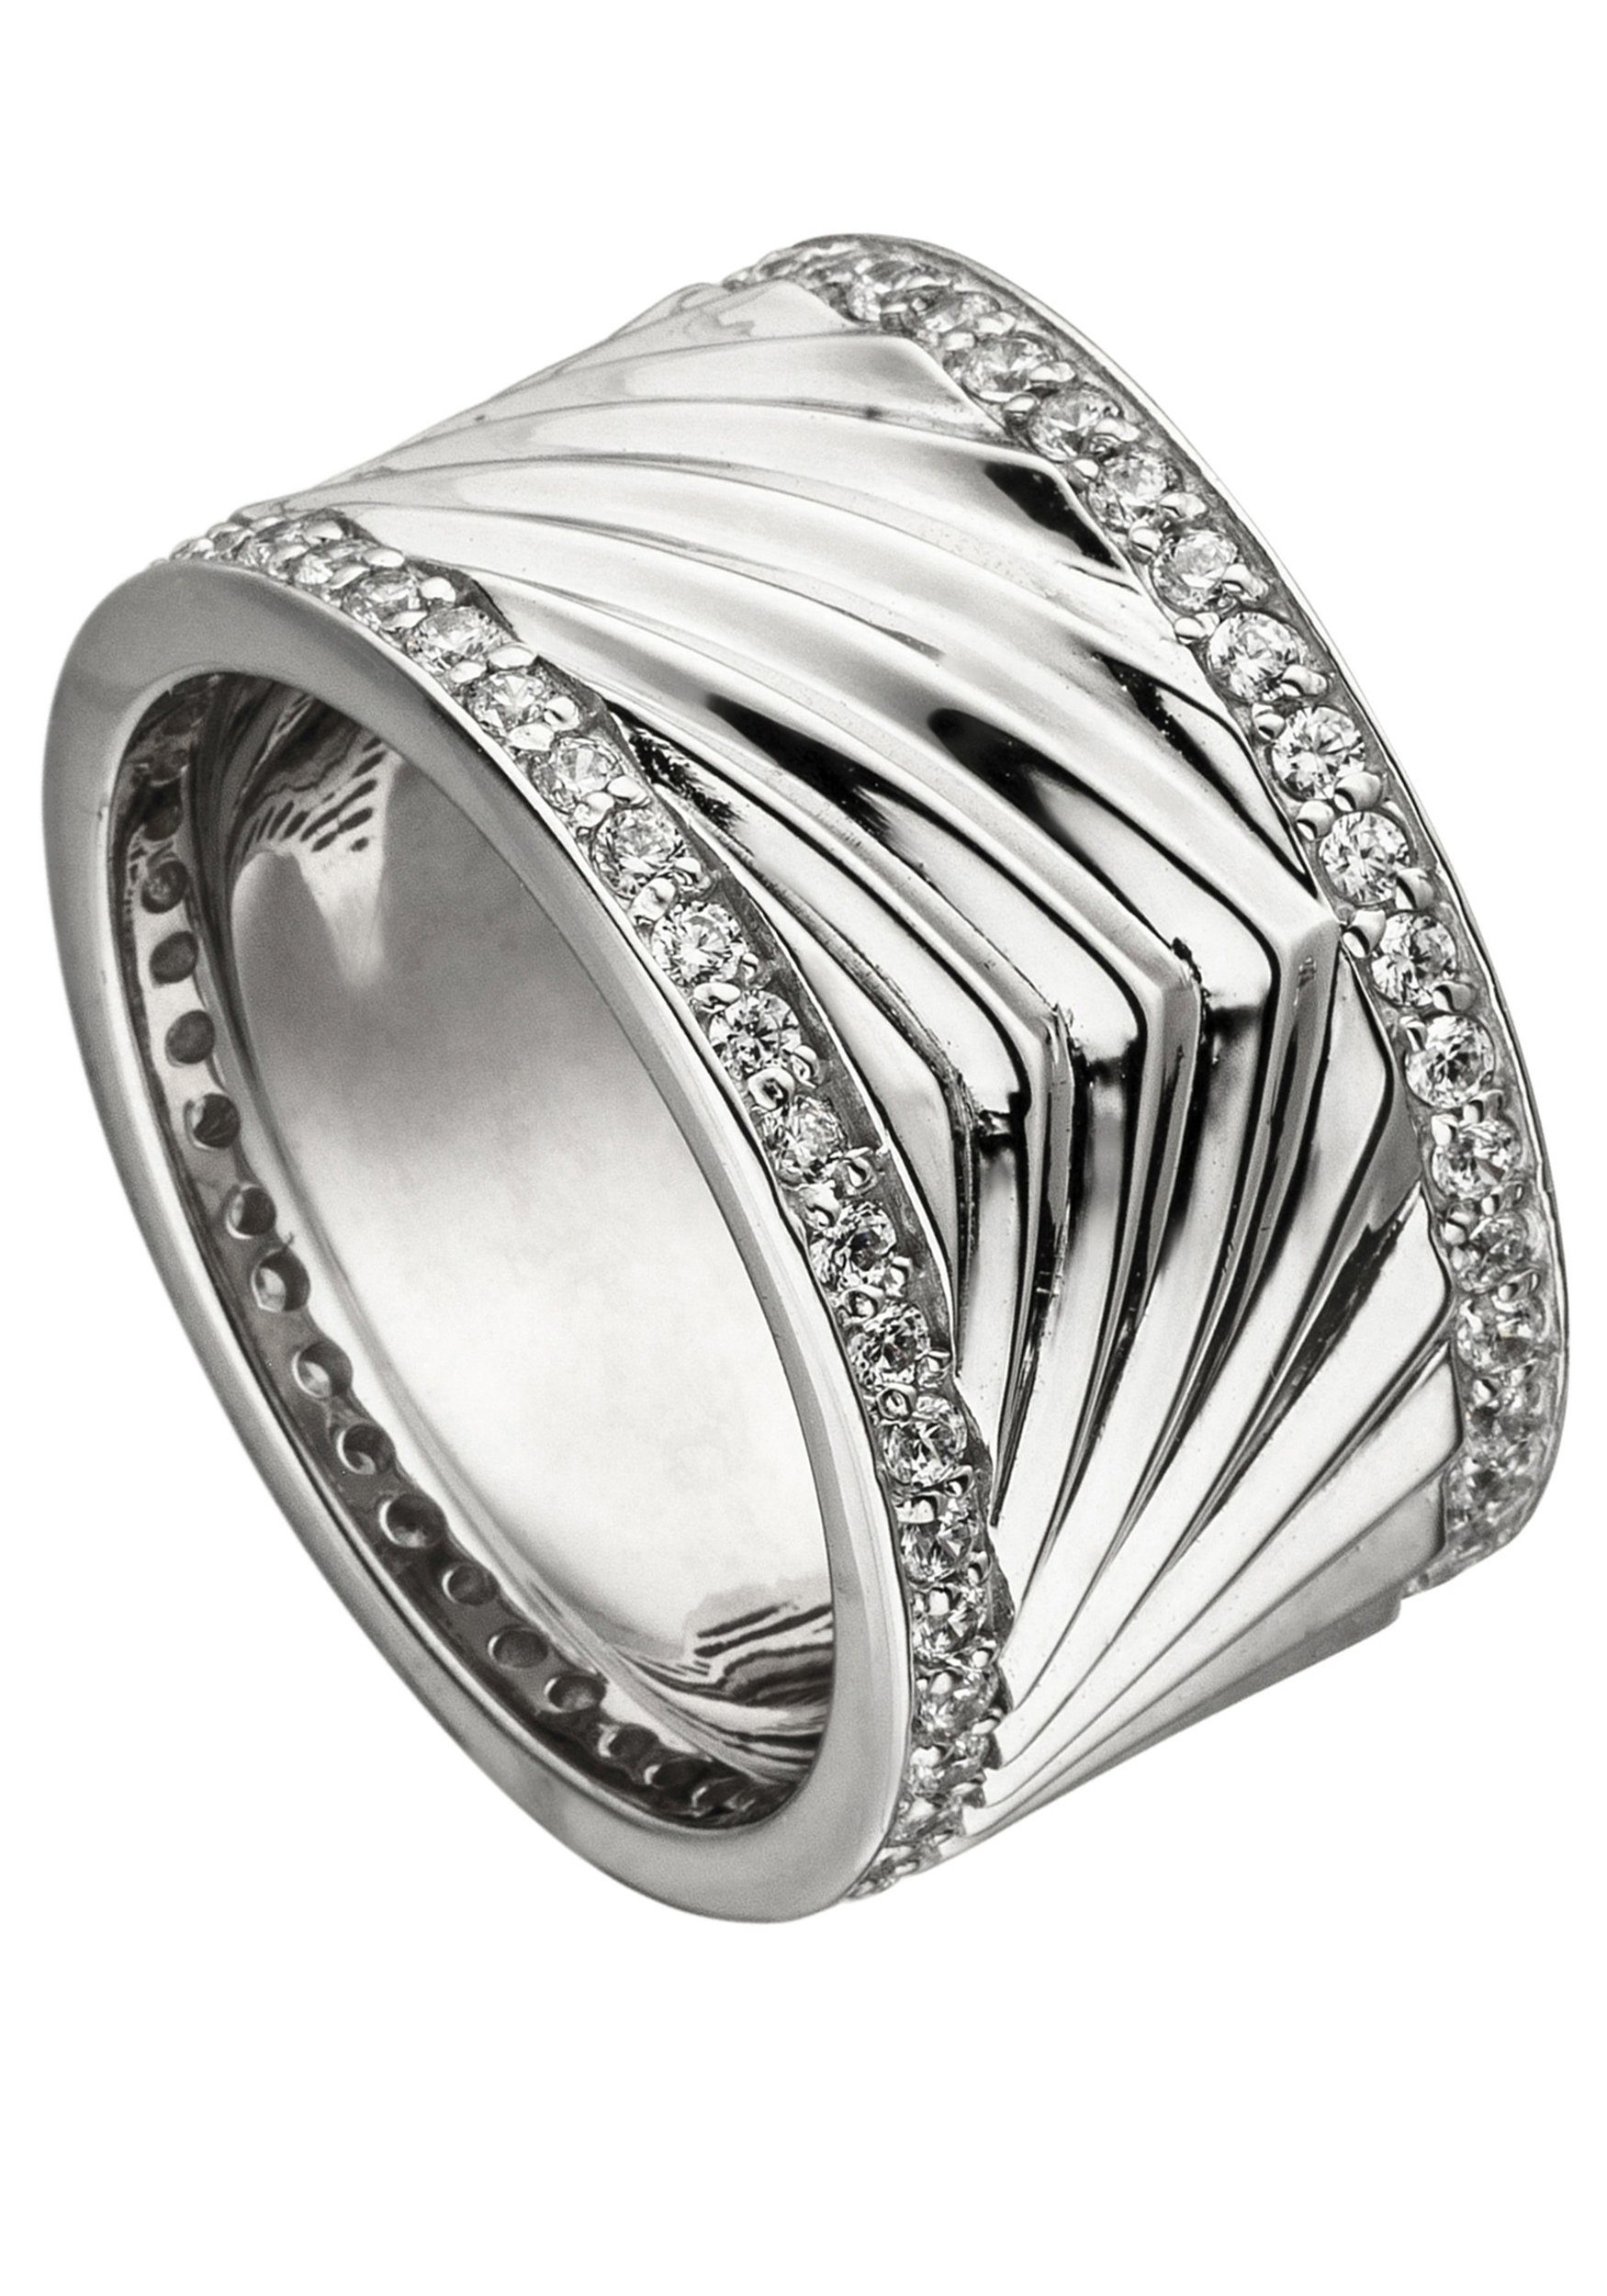 JOBO Fingerring Breiter Ring mit Zirkonia, 925 Silber